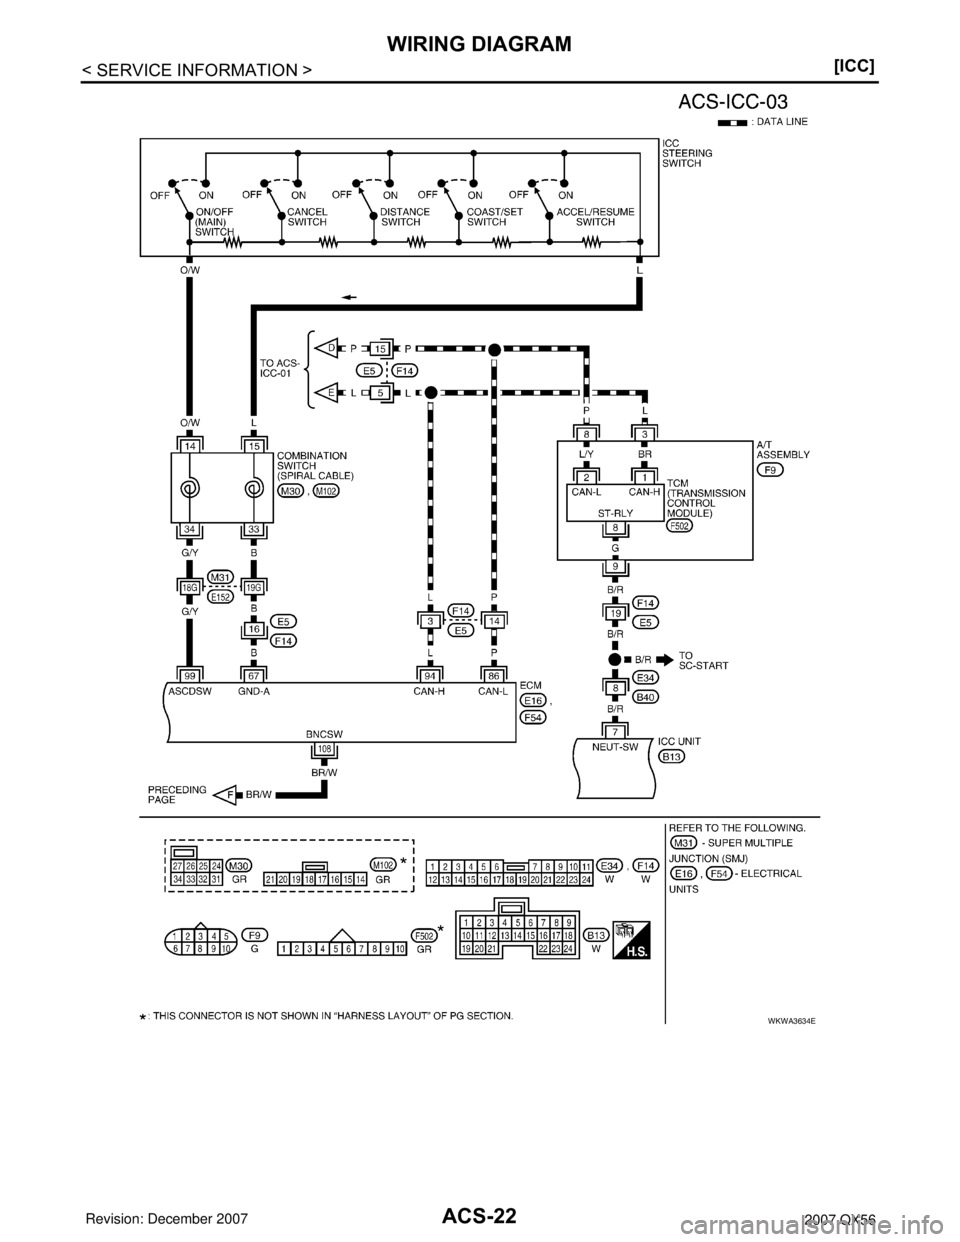 INFINITI QX56 2007  Factory Service Manual ACS-22
< SERVICE INFORMATION >[ICC]
WIRING DIAGRAM
WKWA3634E 